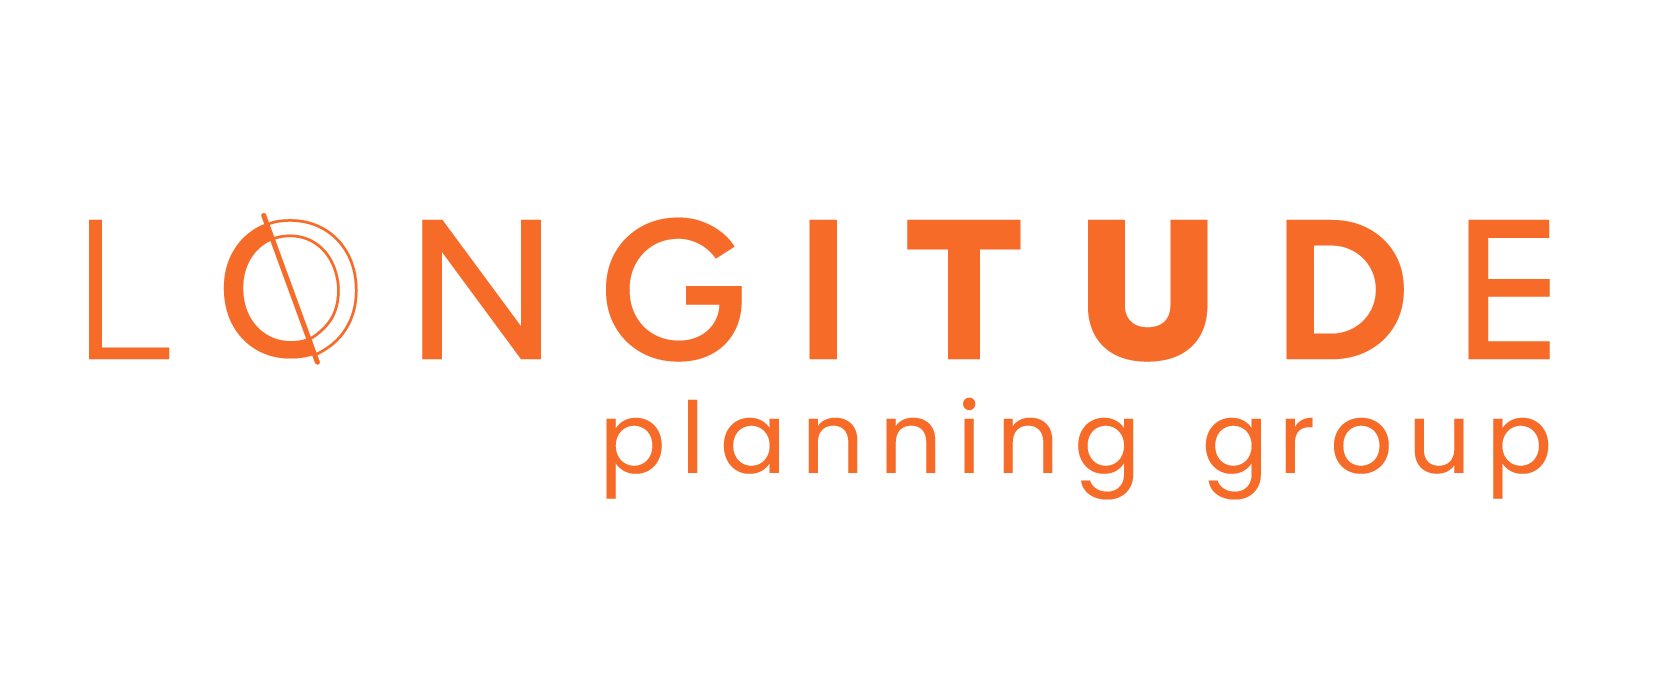 Longitude Planning Group primary logo in orange.